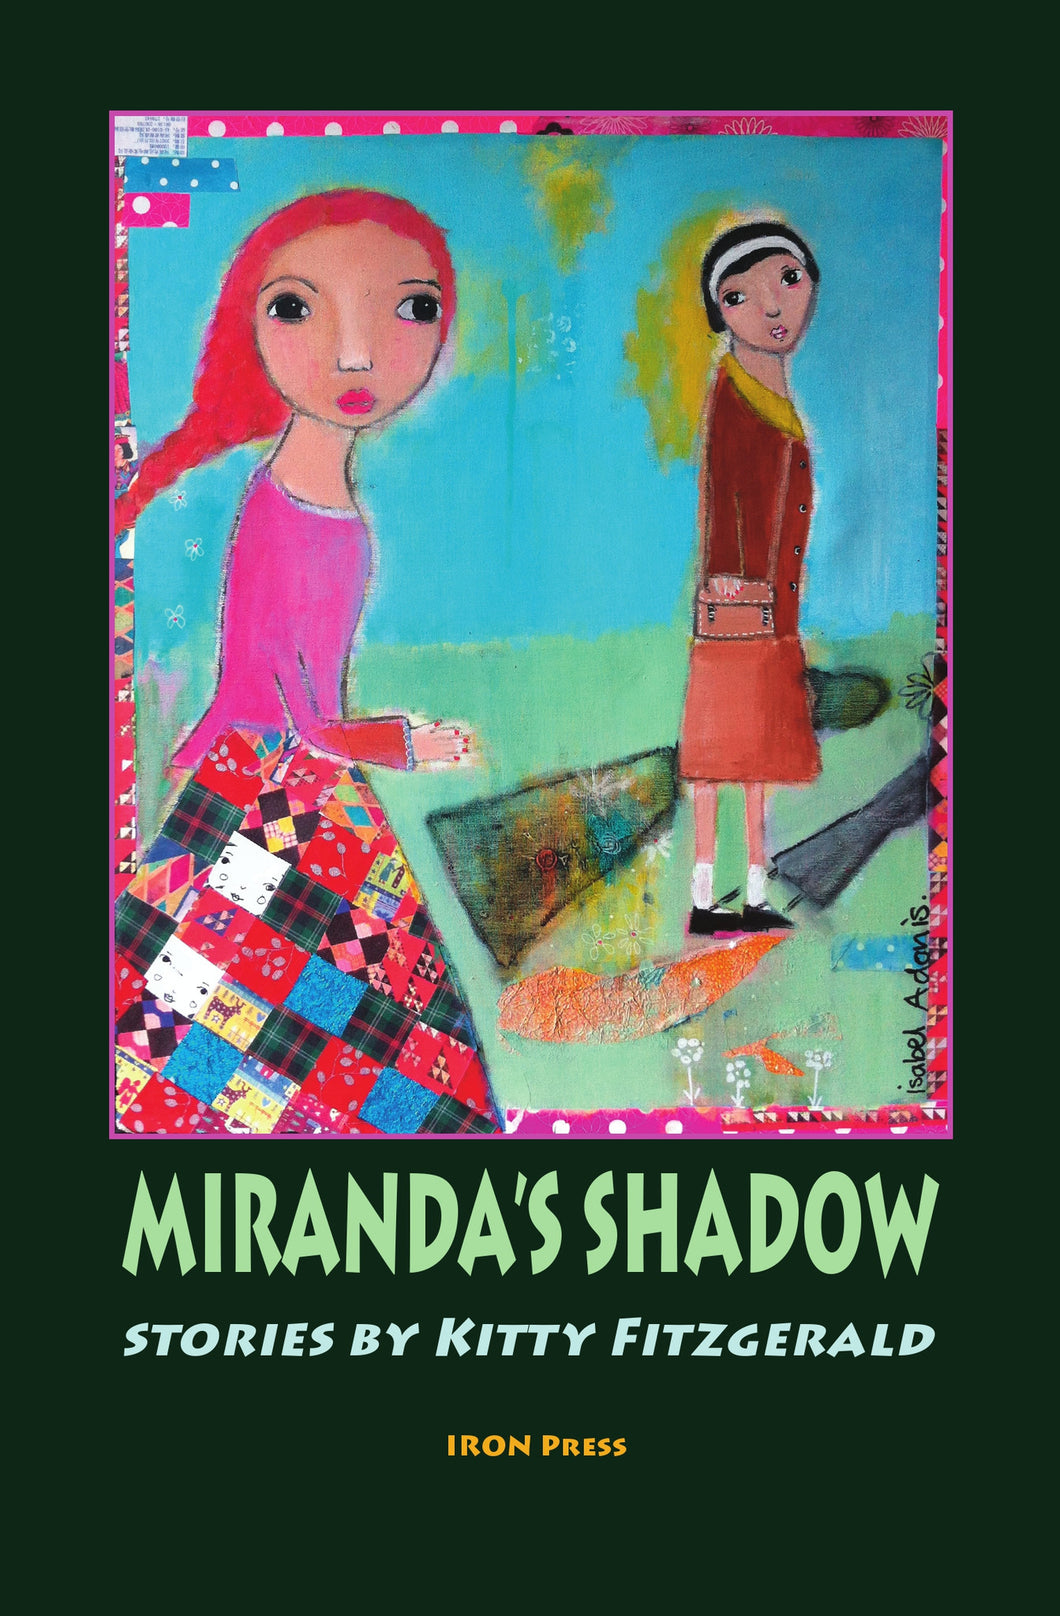 Miranda's Shadow